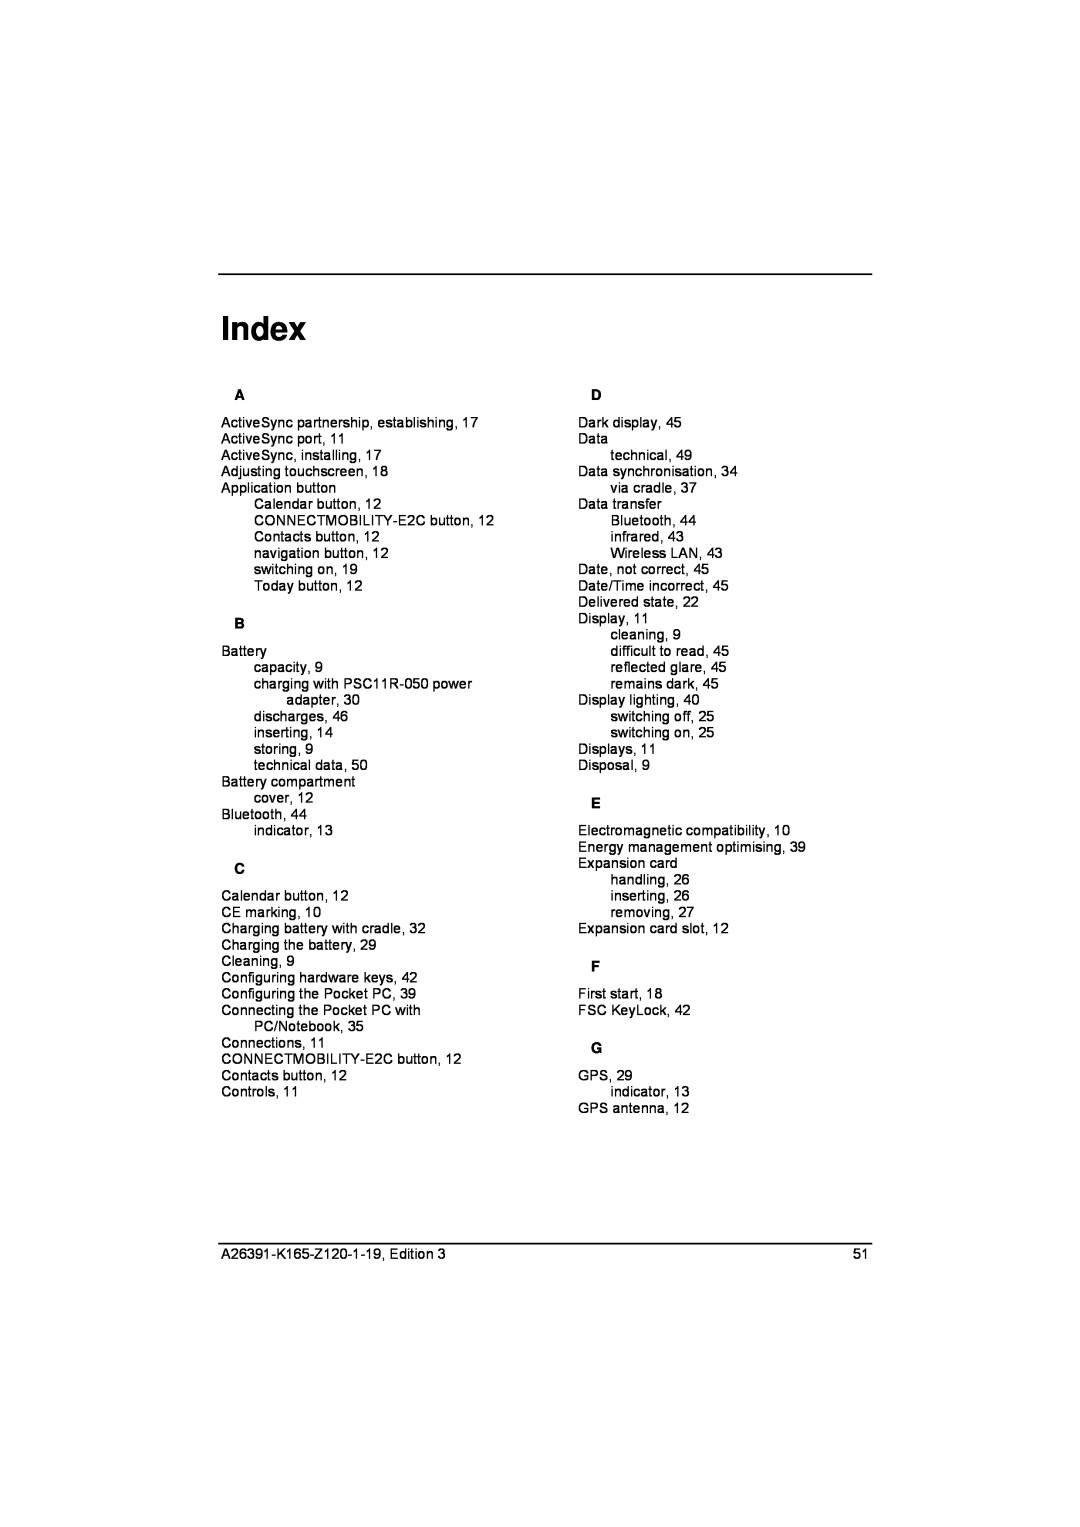 Zweita  Co N/C Series manual Index 